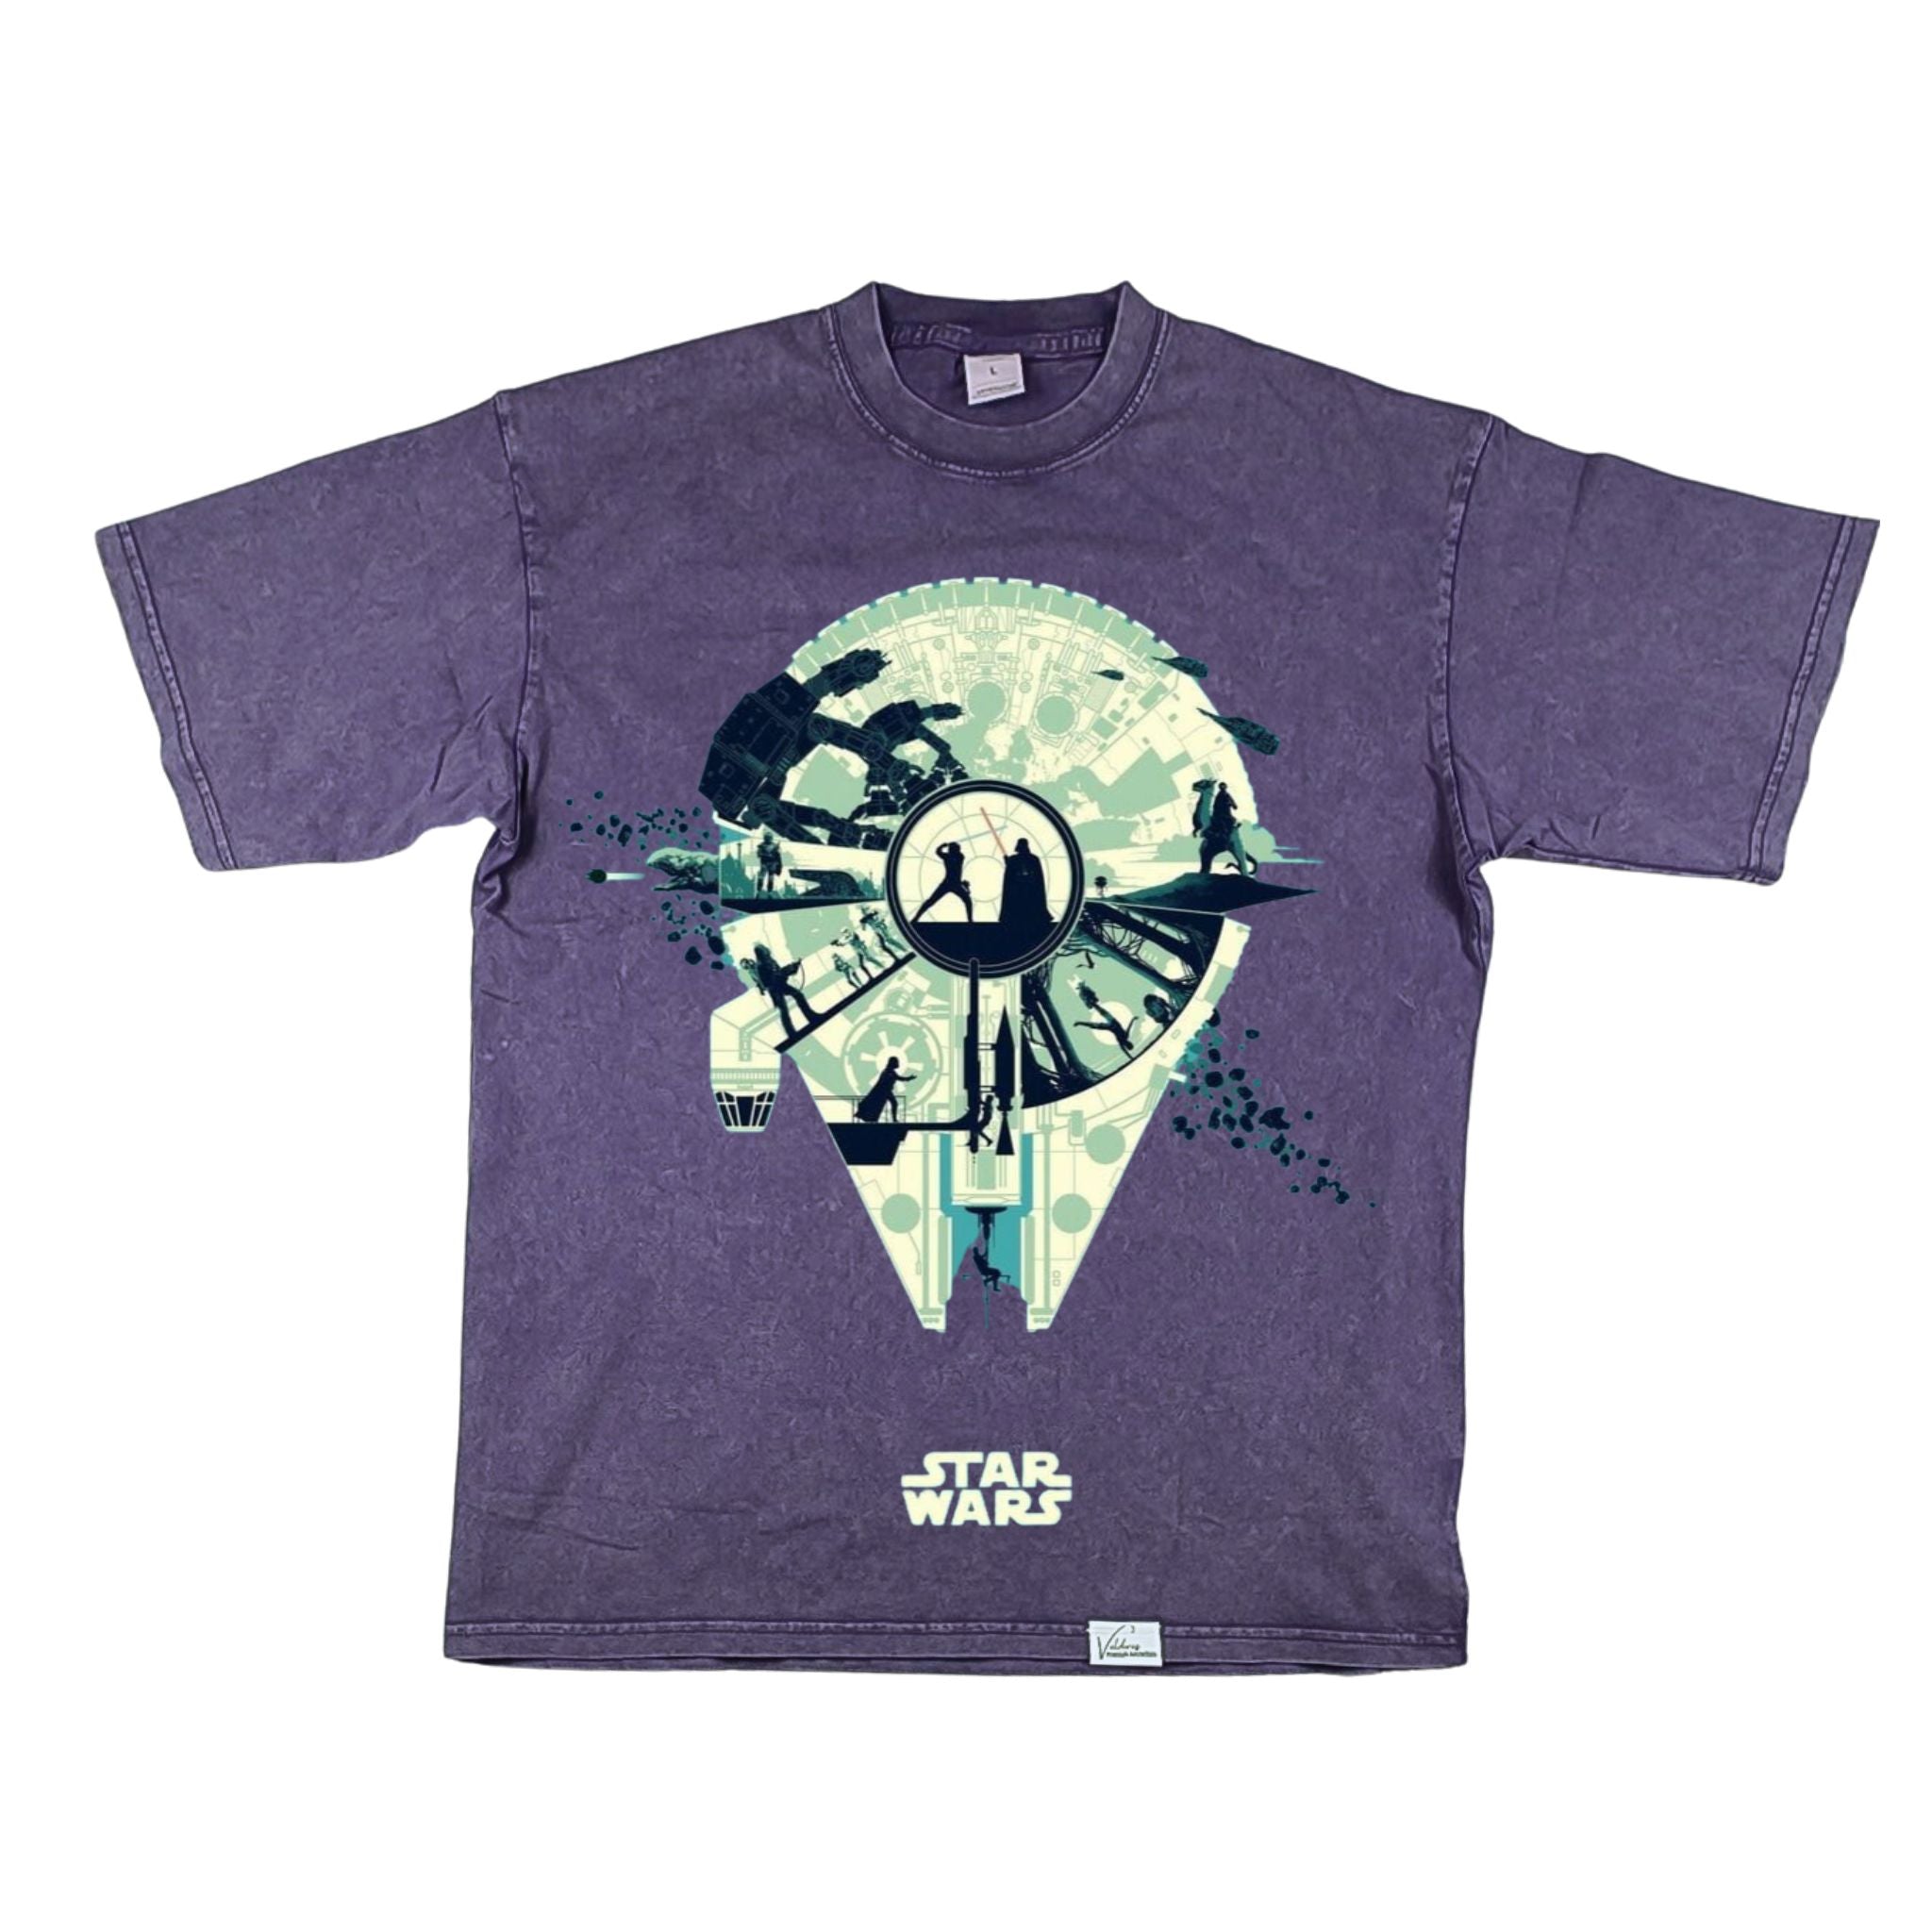 Star Wars Purple Tee